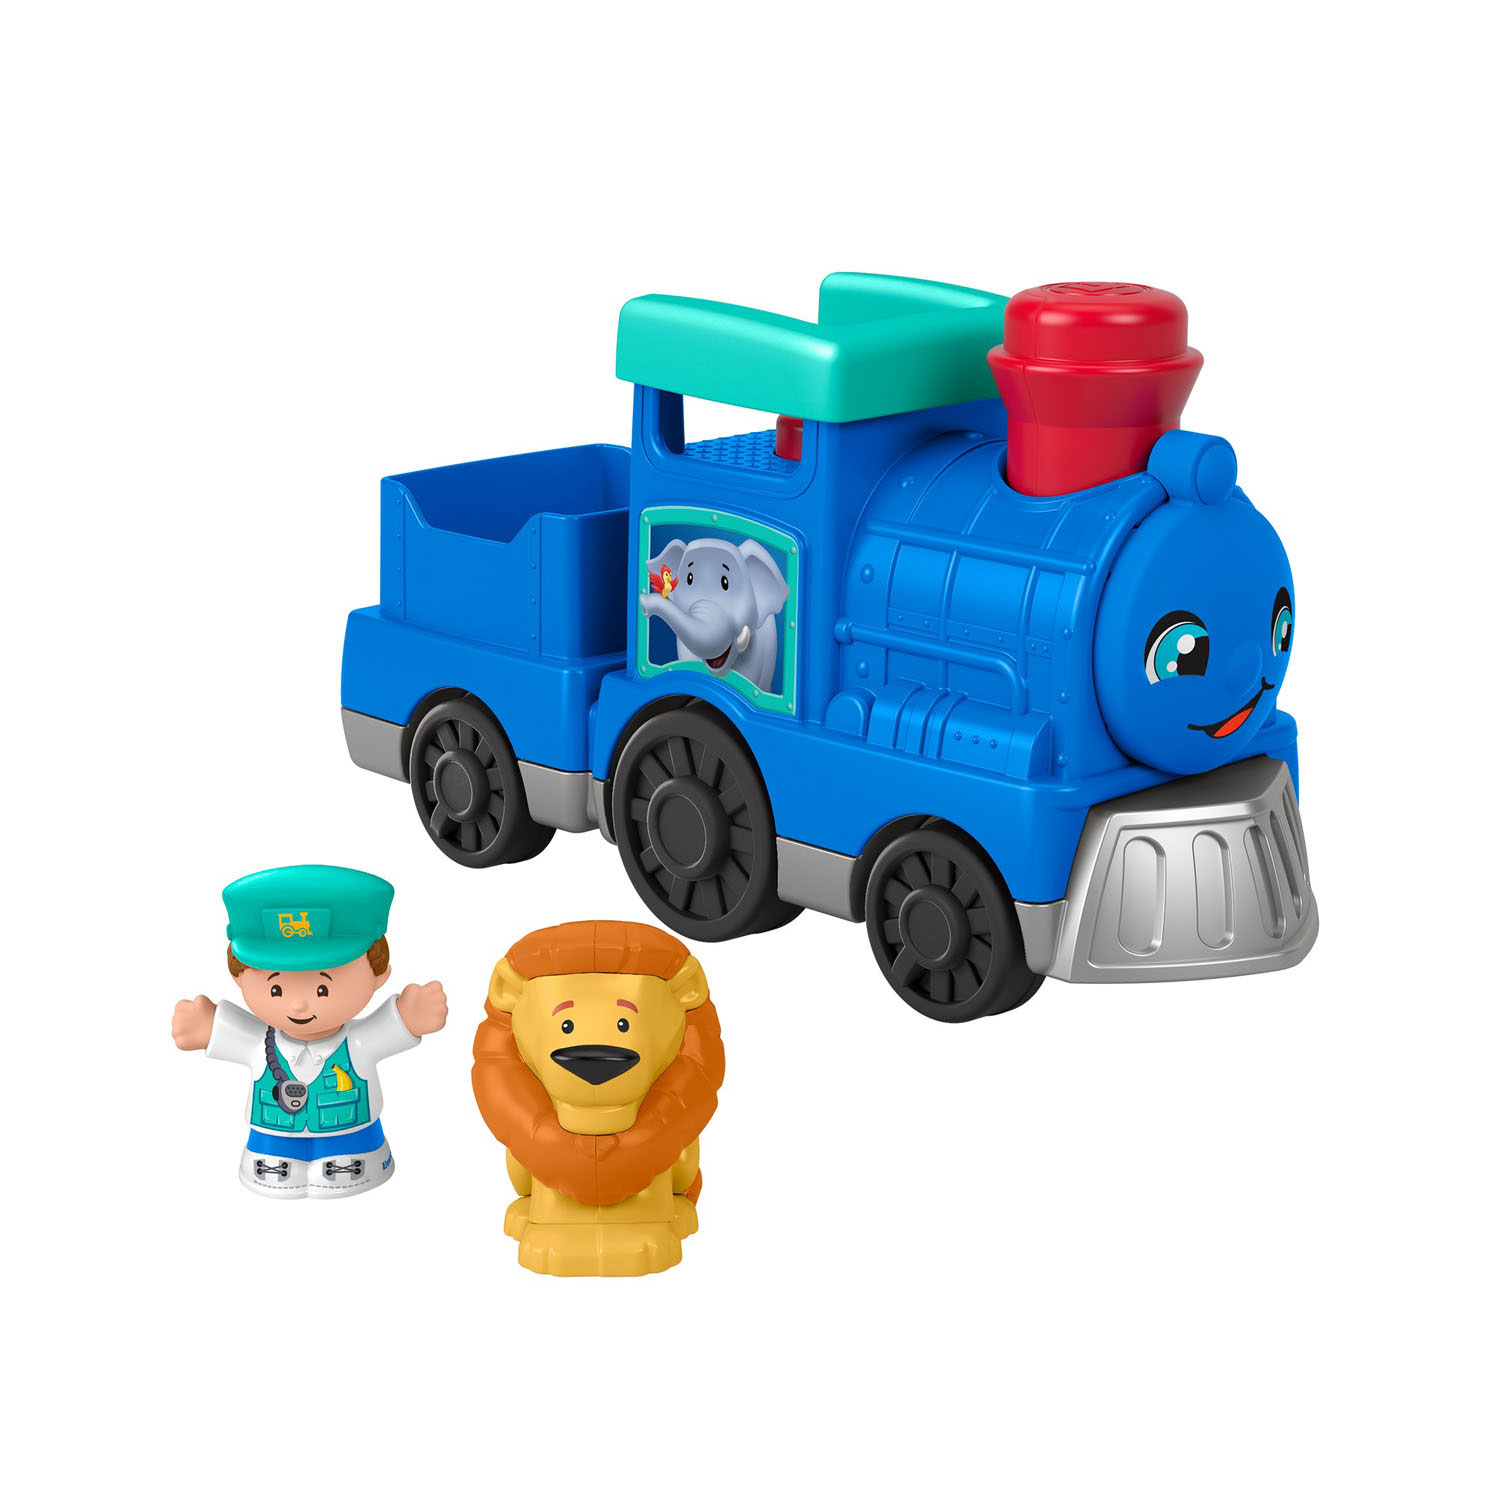 storm Vaardigheid Gemoedsrust Fisher Price Little People Animal train | Thimble Toys